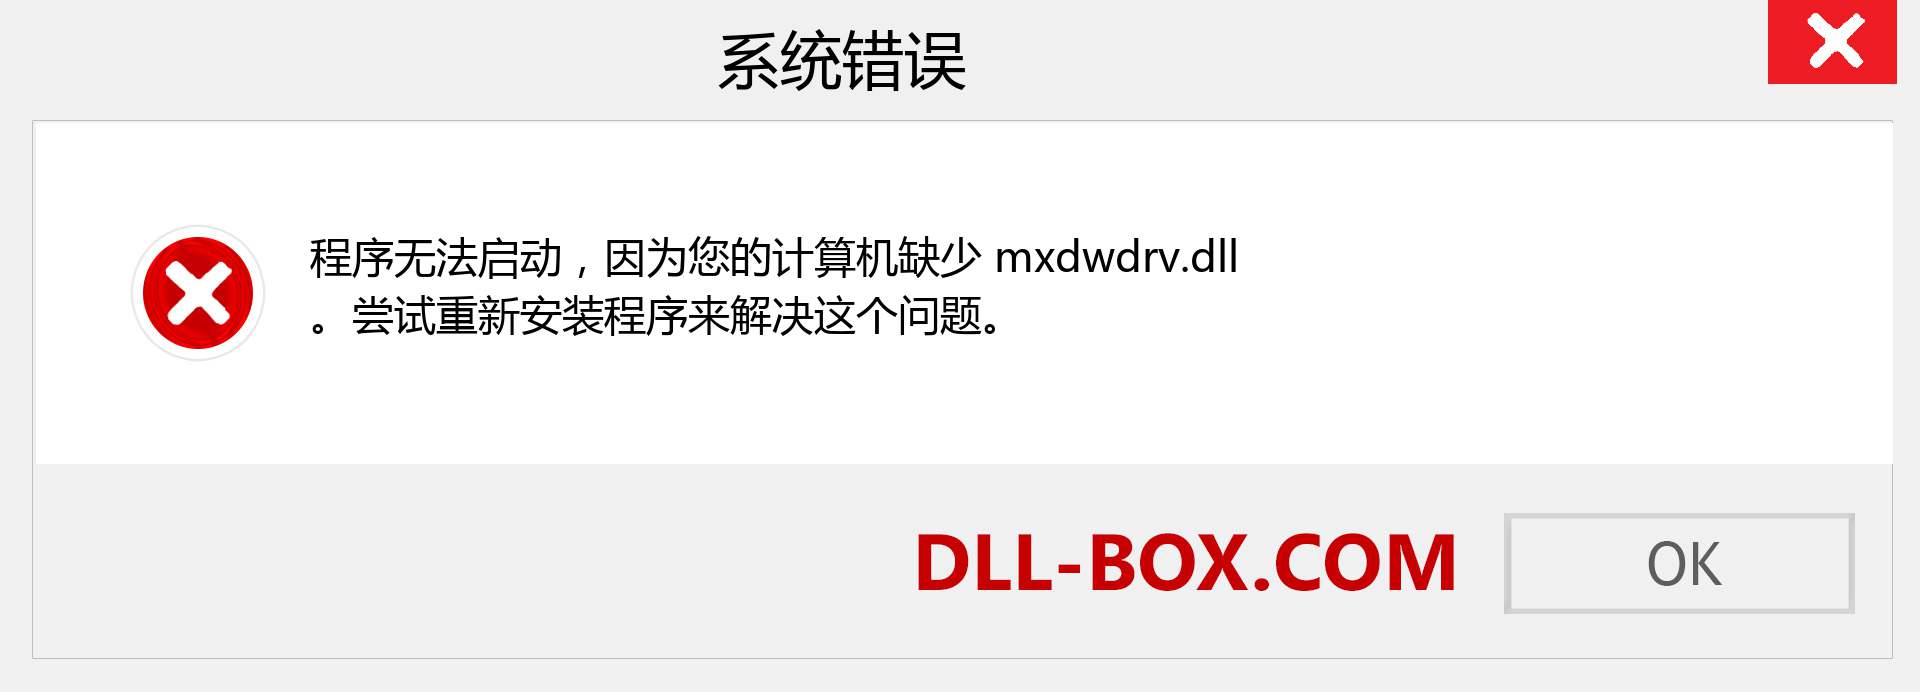 mxdwdrv.dll 文件丢失？。 适用于 Windows 7、8、10 的下载 - 修复 Windows、照片、图像上的 mxdwdrv dll 丢失错误